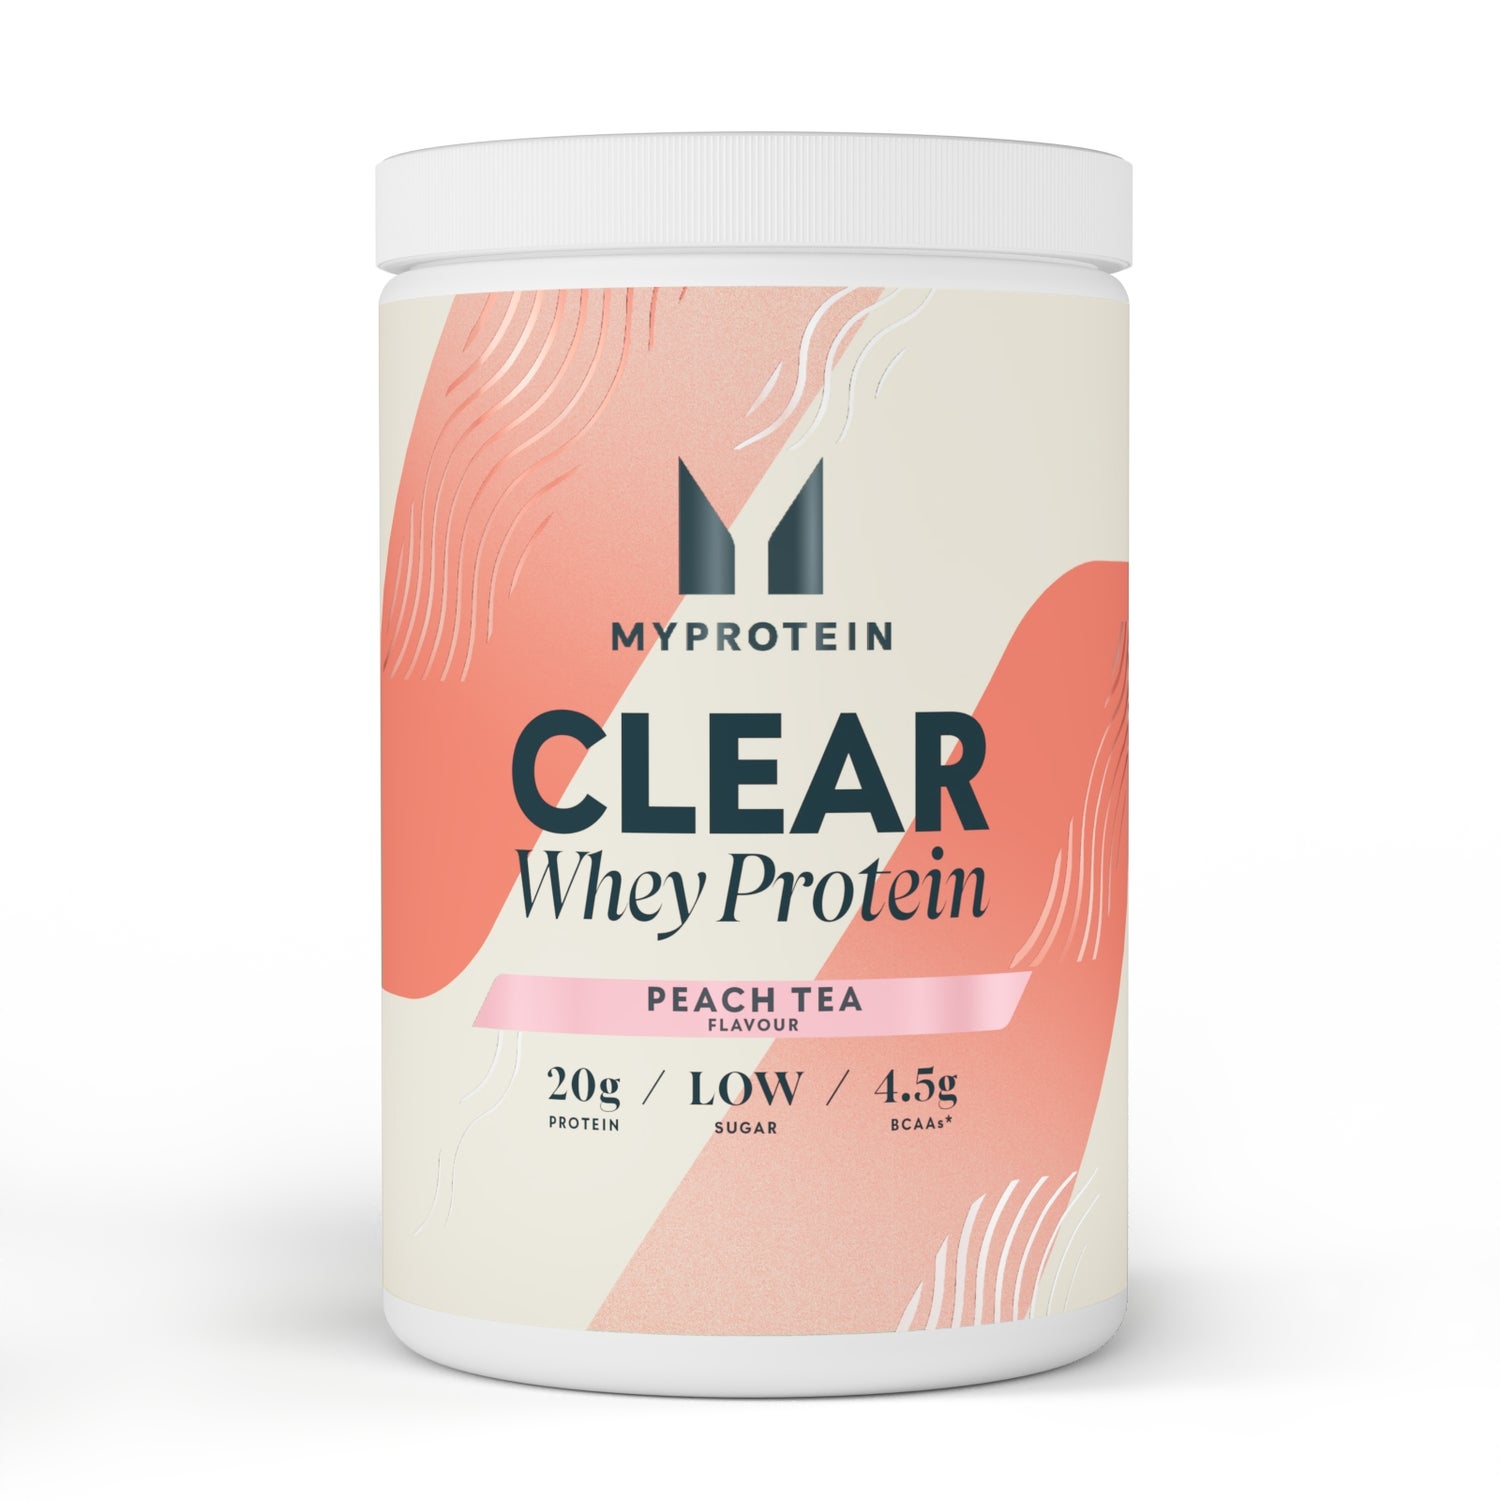 Myprotein Clear Whey Isolate - 20servings - Peach Tea